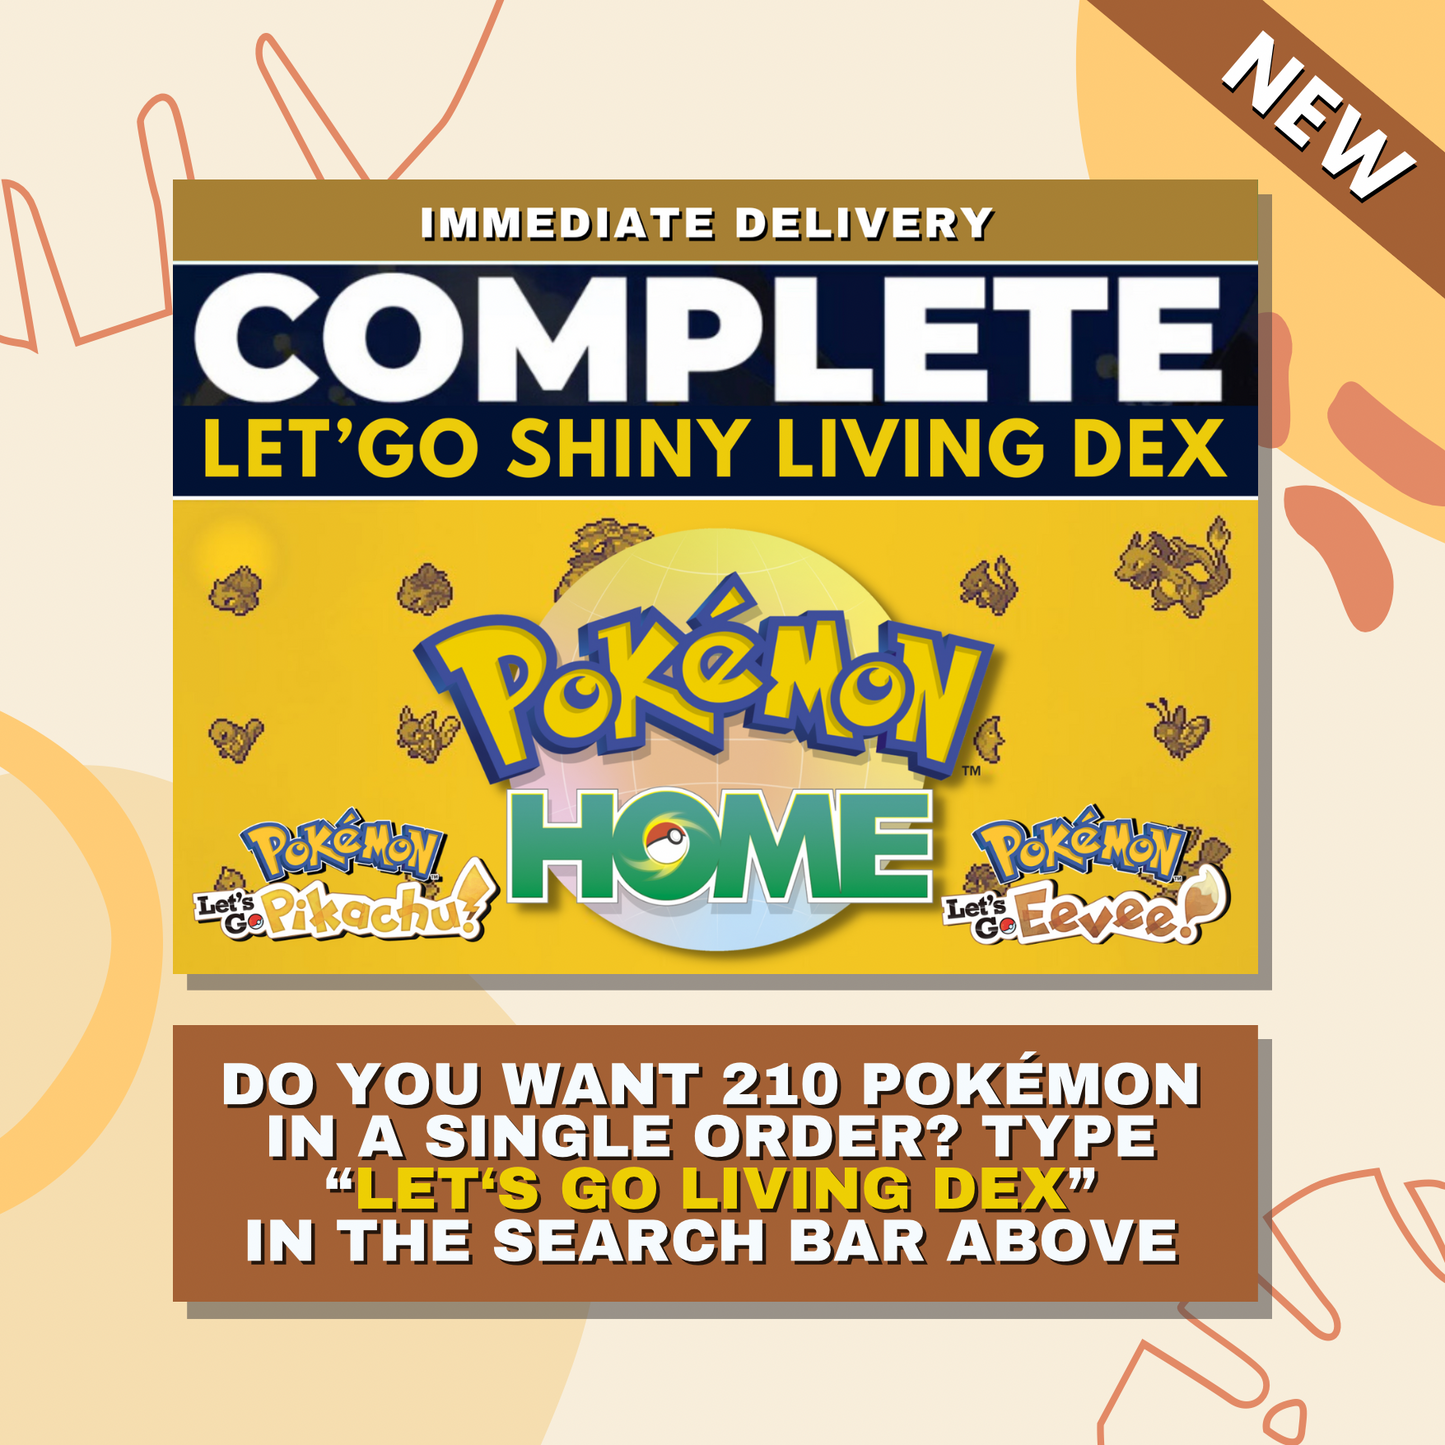 Hitmonchan Shiny ✨ or Non Shiny Pokémon Let's Go Pikachu Eevee Level 100 Competitive Battle Ready 6 IV 100% Legit Legal Customizable Custom OT by Shiny Living Dex | Shiny Living Dex